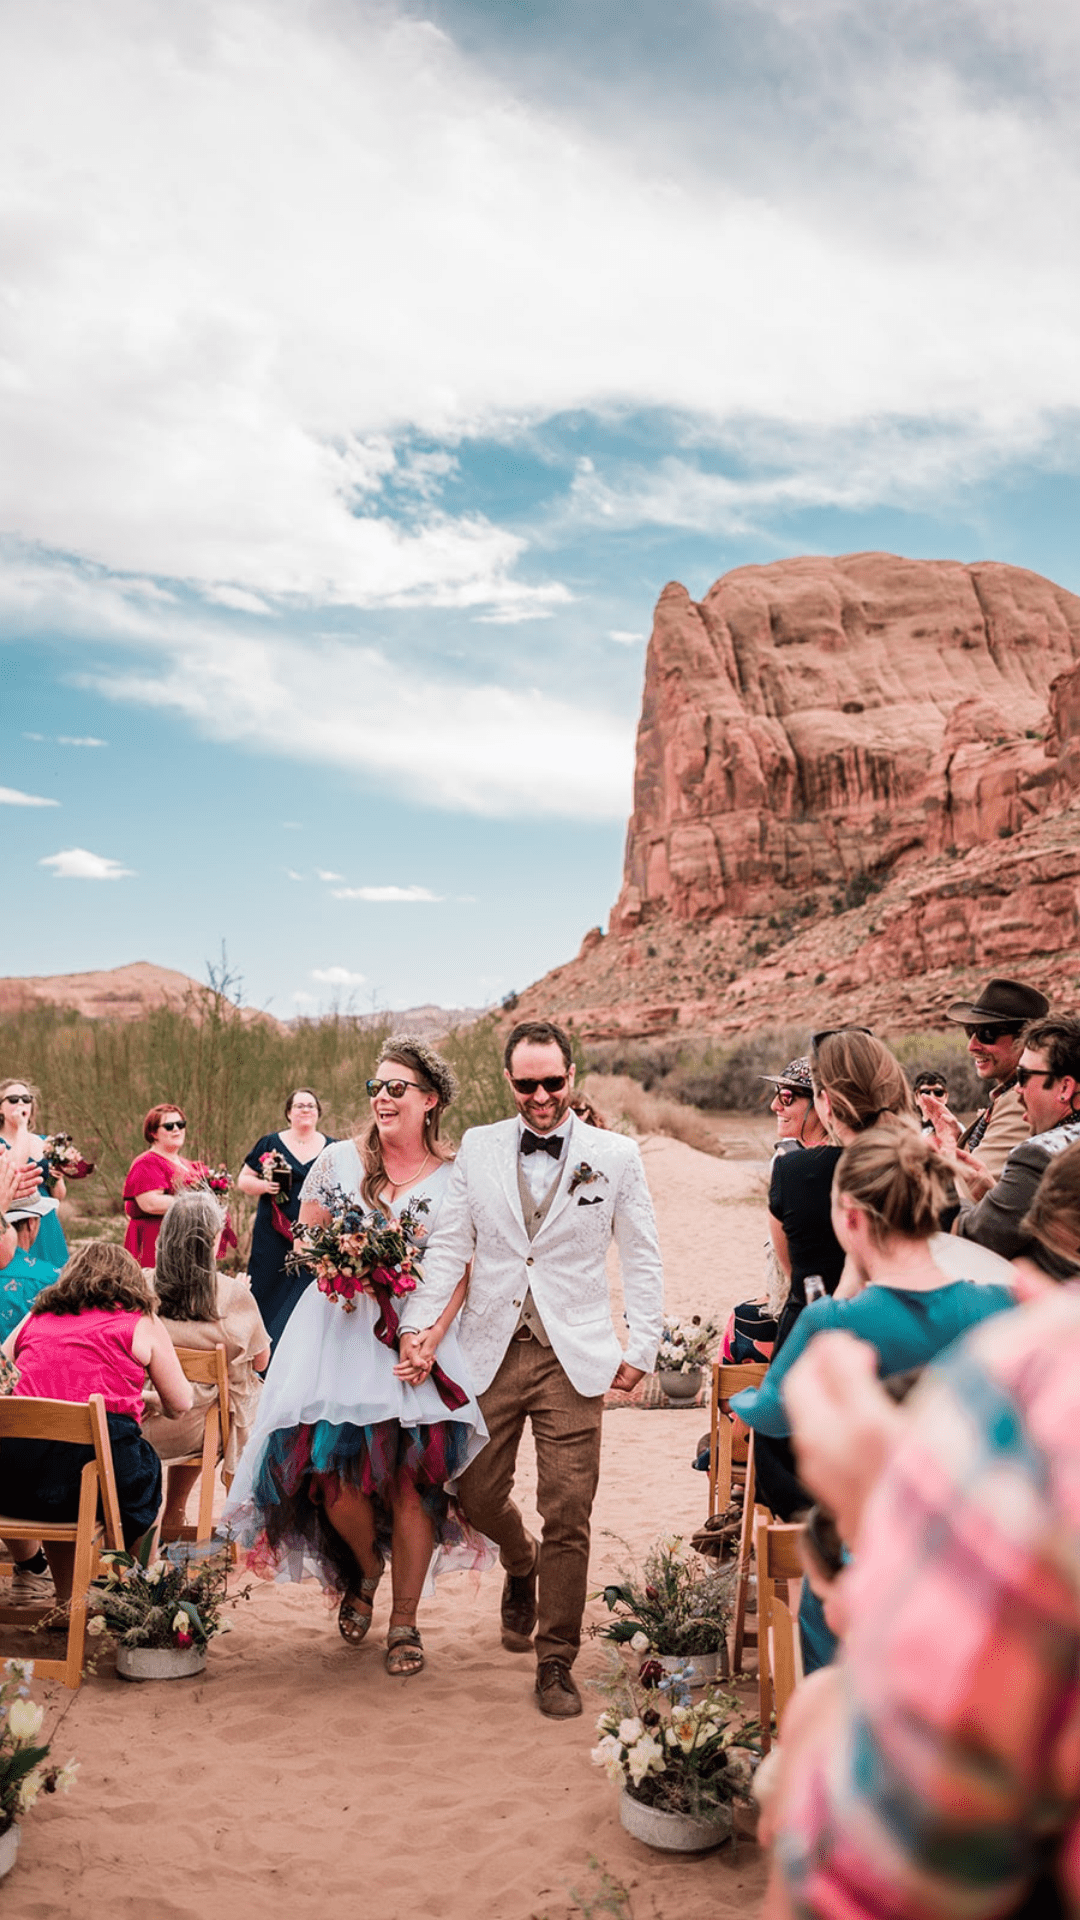 Non-traditional wedding dress inspiration from Amanda Matilda | Colorado Elopement Photographer